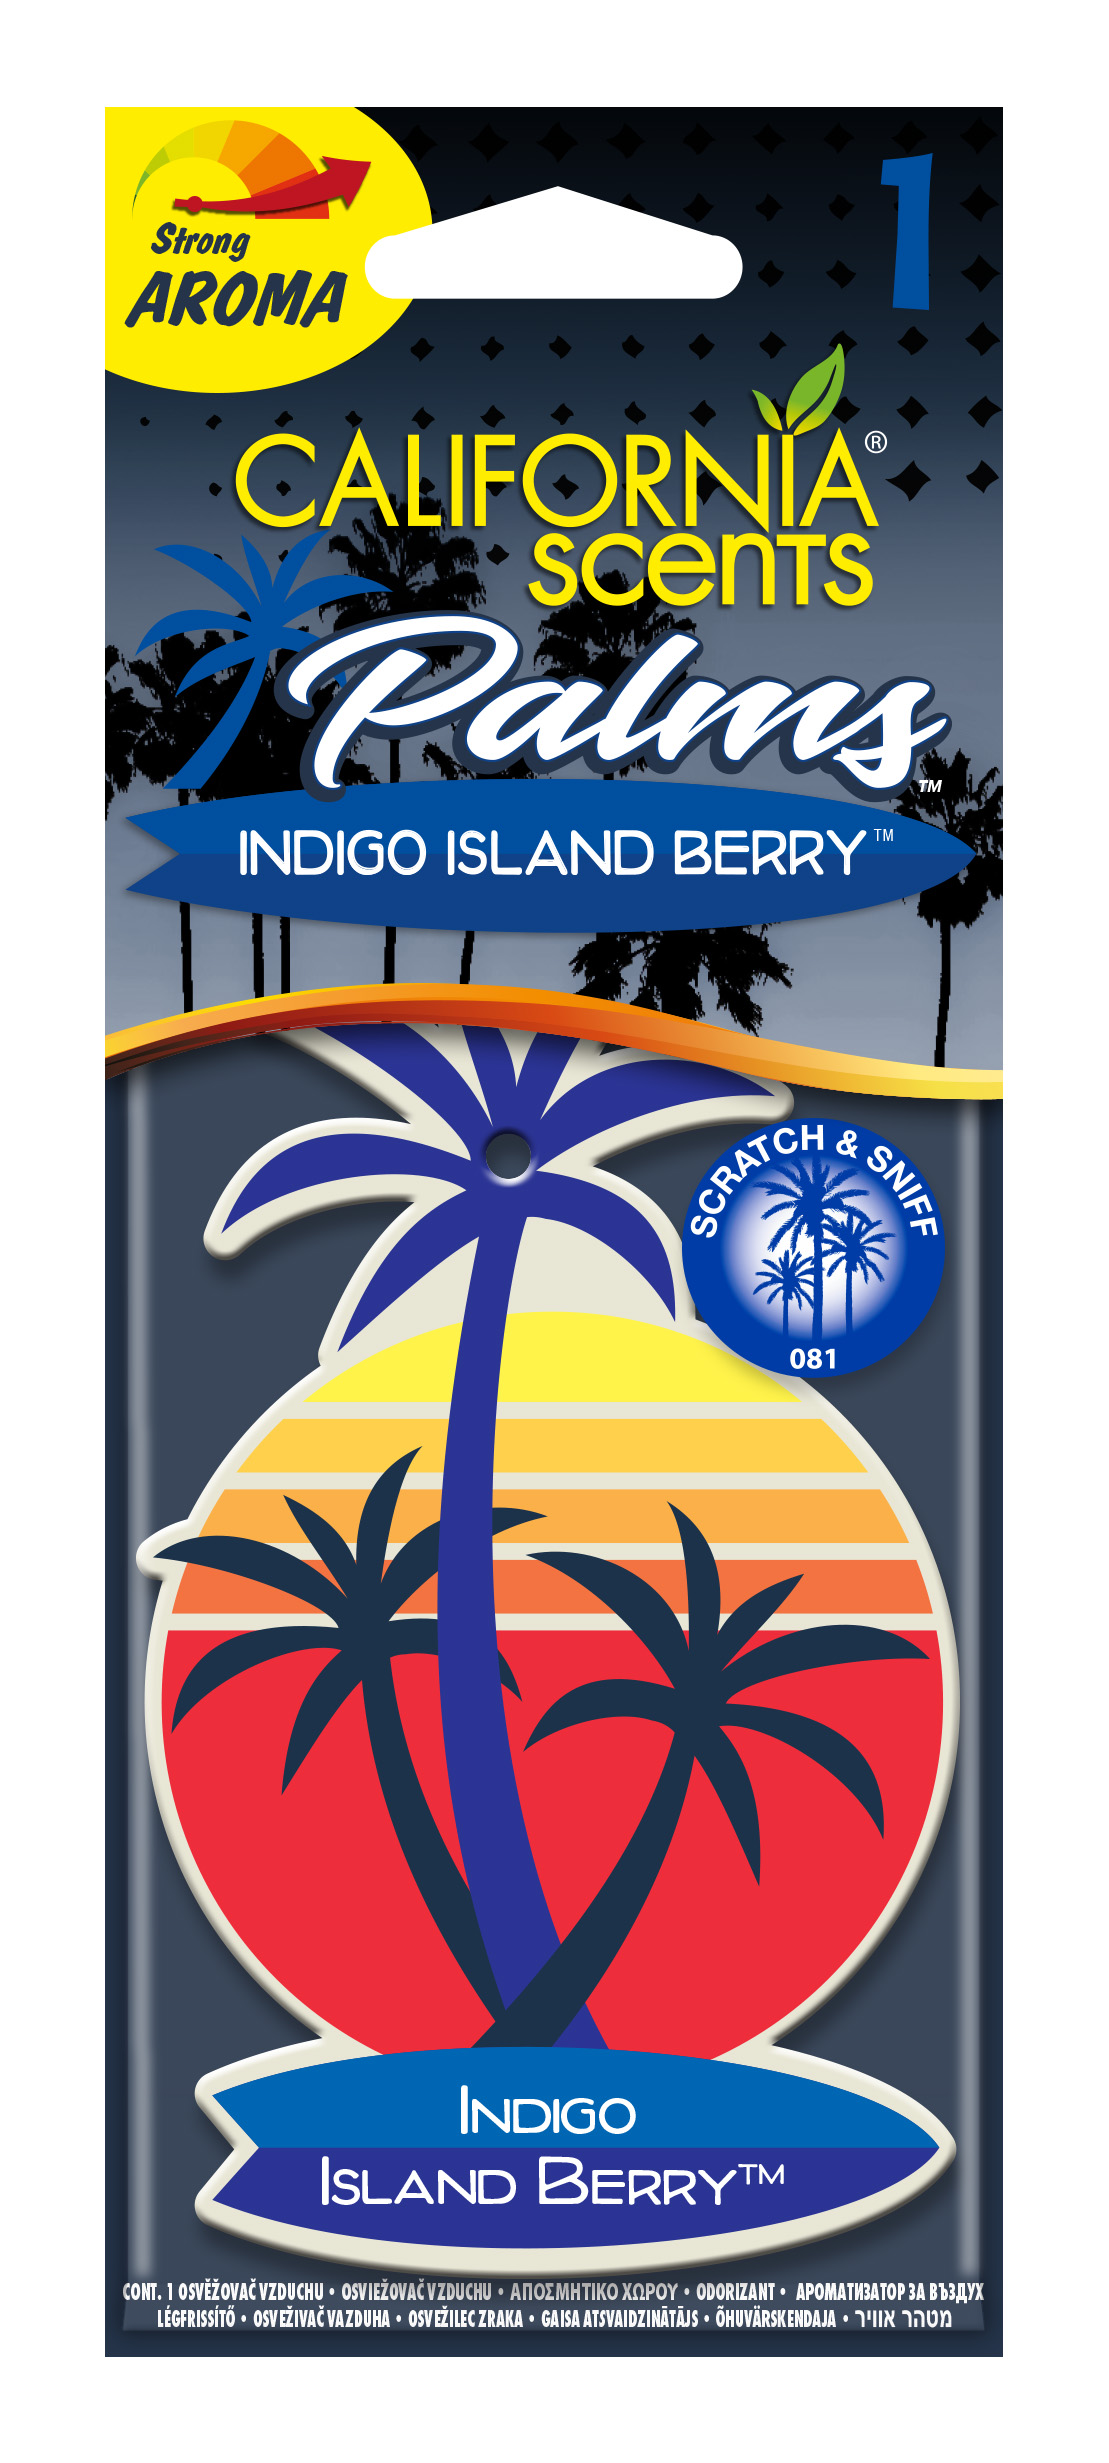 California Scents Palms Indigo Island Berry Duftbaum